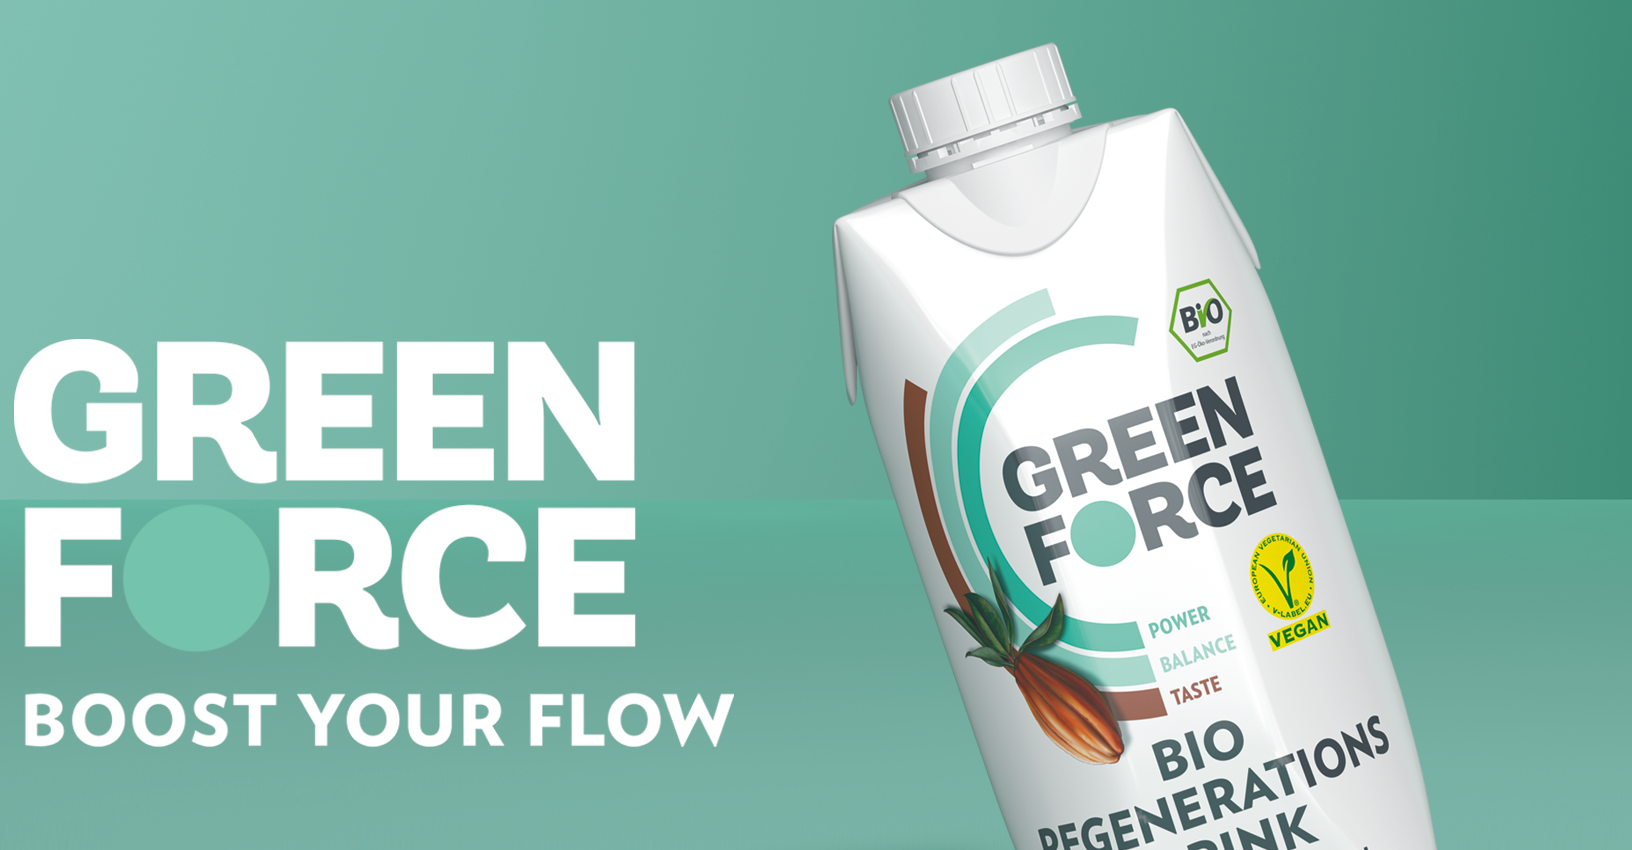 Greenforce Bio Regeneration Drinks Relaunch Grafikdesign Branding-Strategie Verpackungsdesign Logodesign Line Extension POS Material Corporate Design